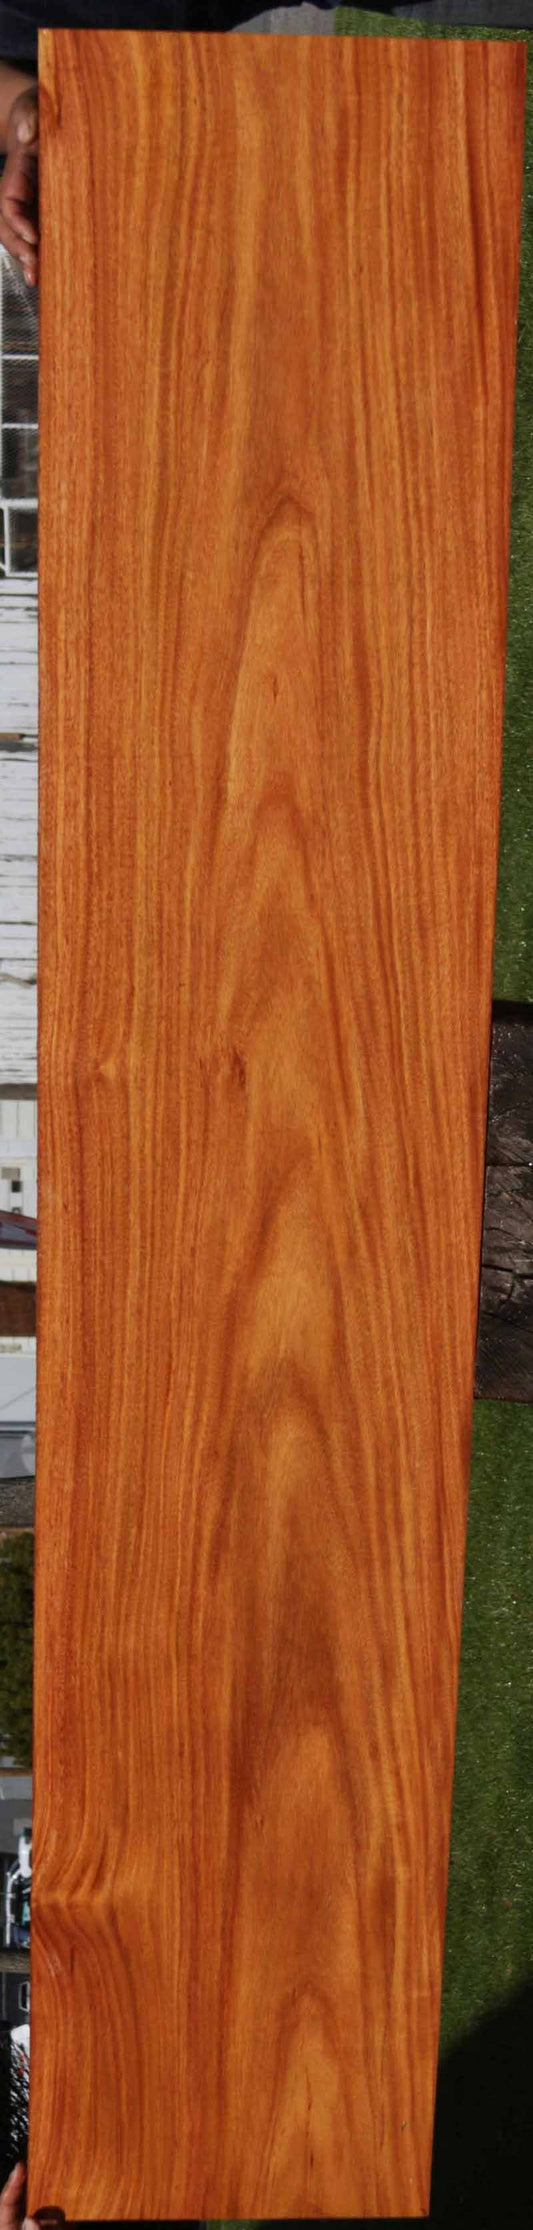 Santos Mahogany Long Lumber